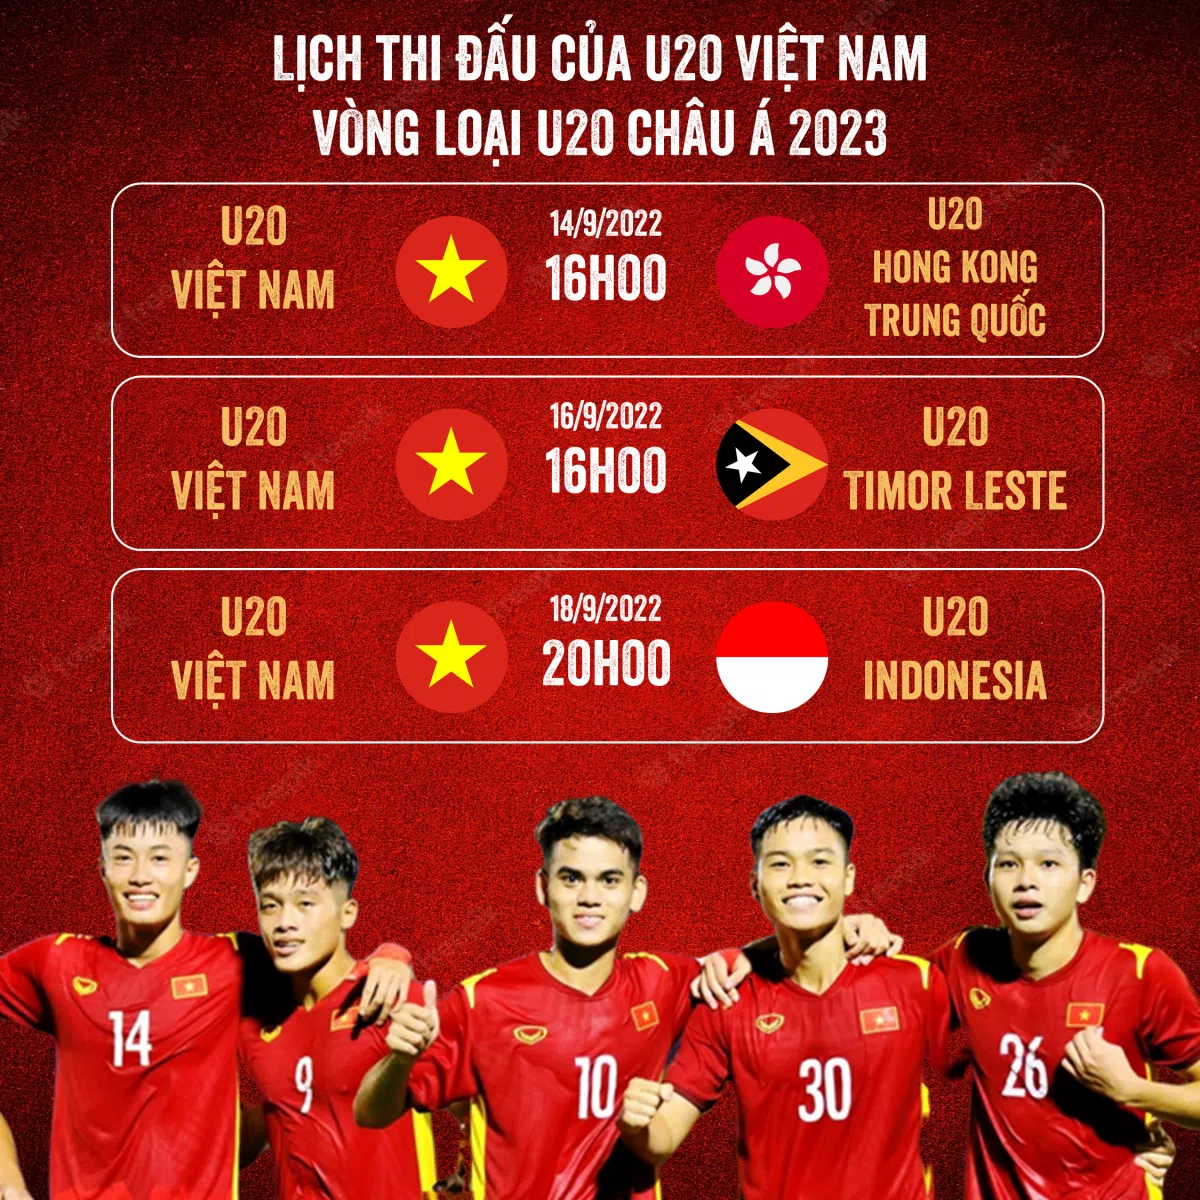 Trực tiếp U20 Việt Nam vs U20 Hong Kong link xem trực tiếp U20 Việt Nam vs U20 Hong Kong: 16h00 14/09/2022